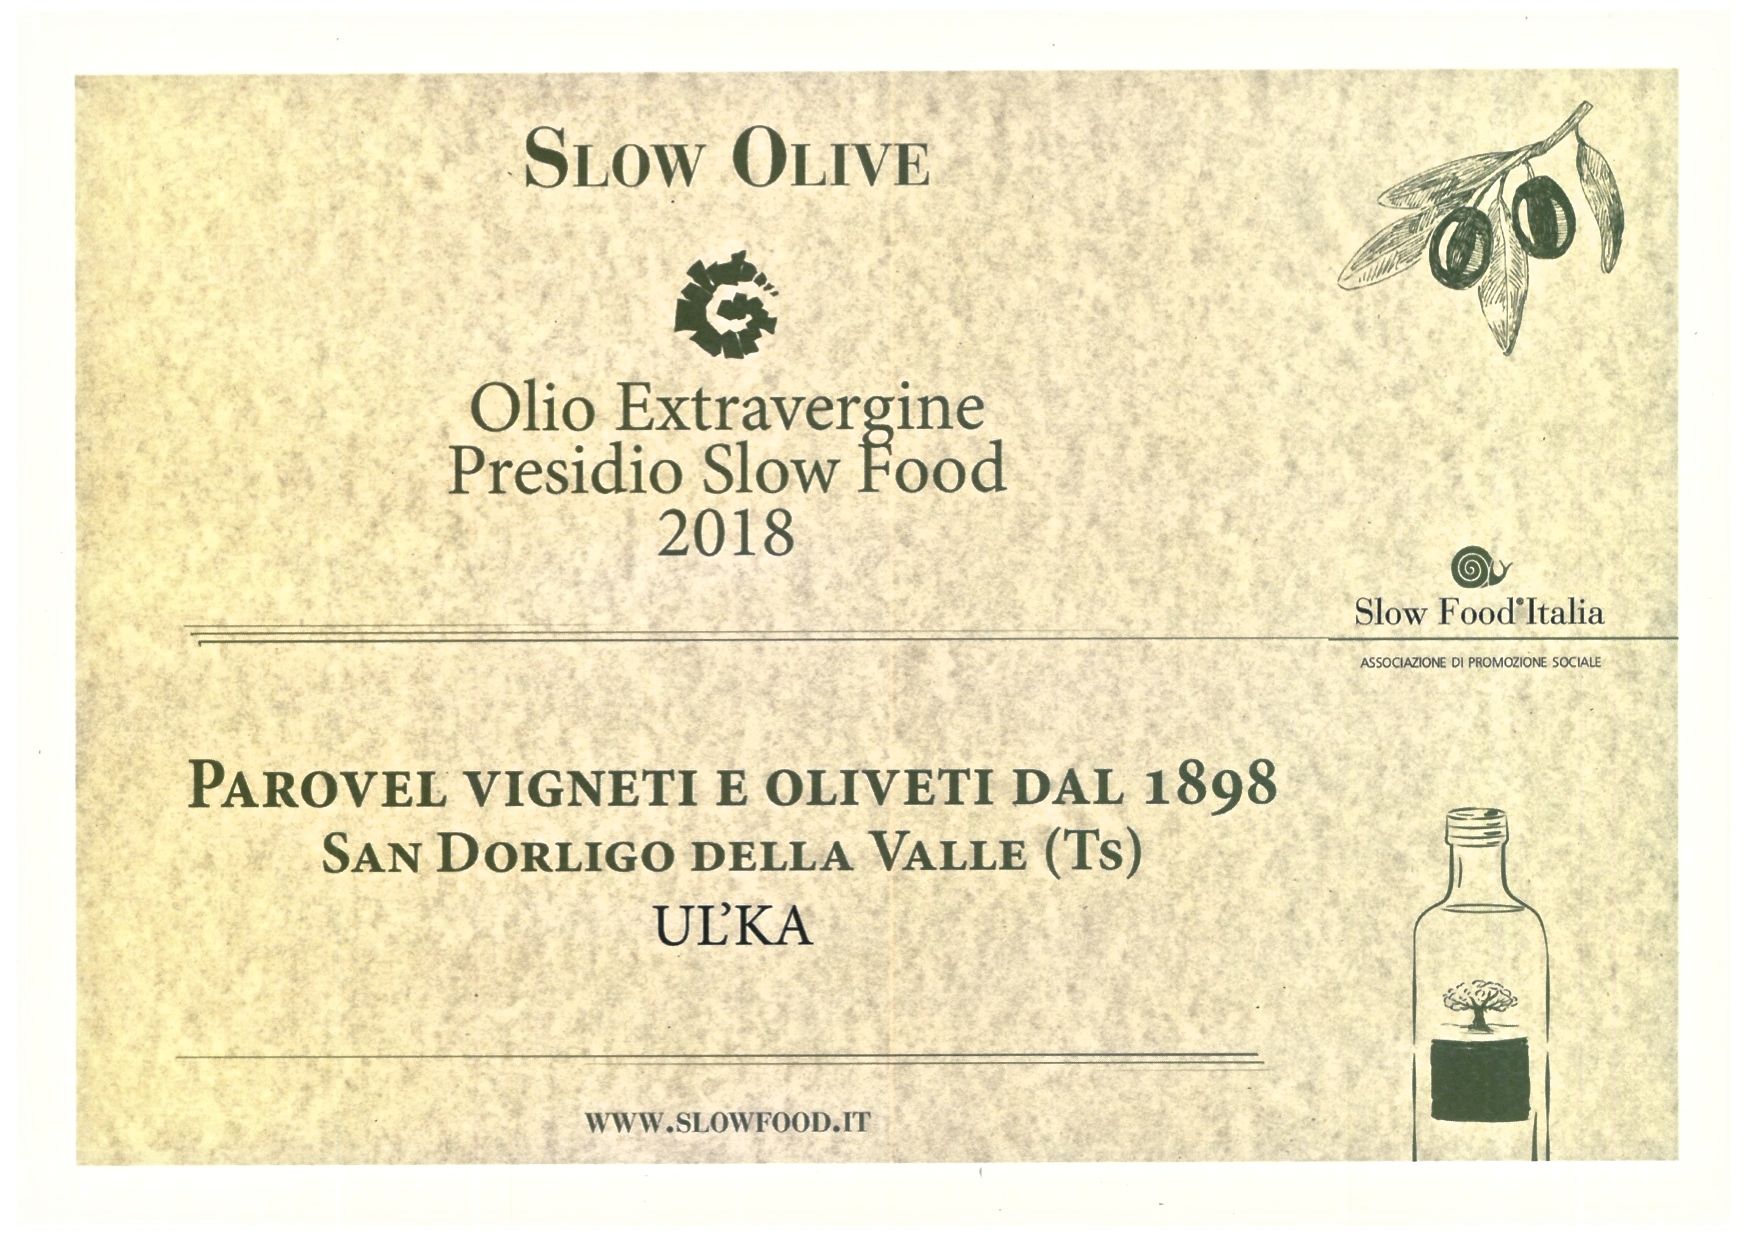 2018 SLOW OLIVE attestato